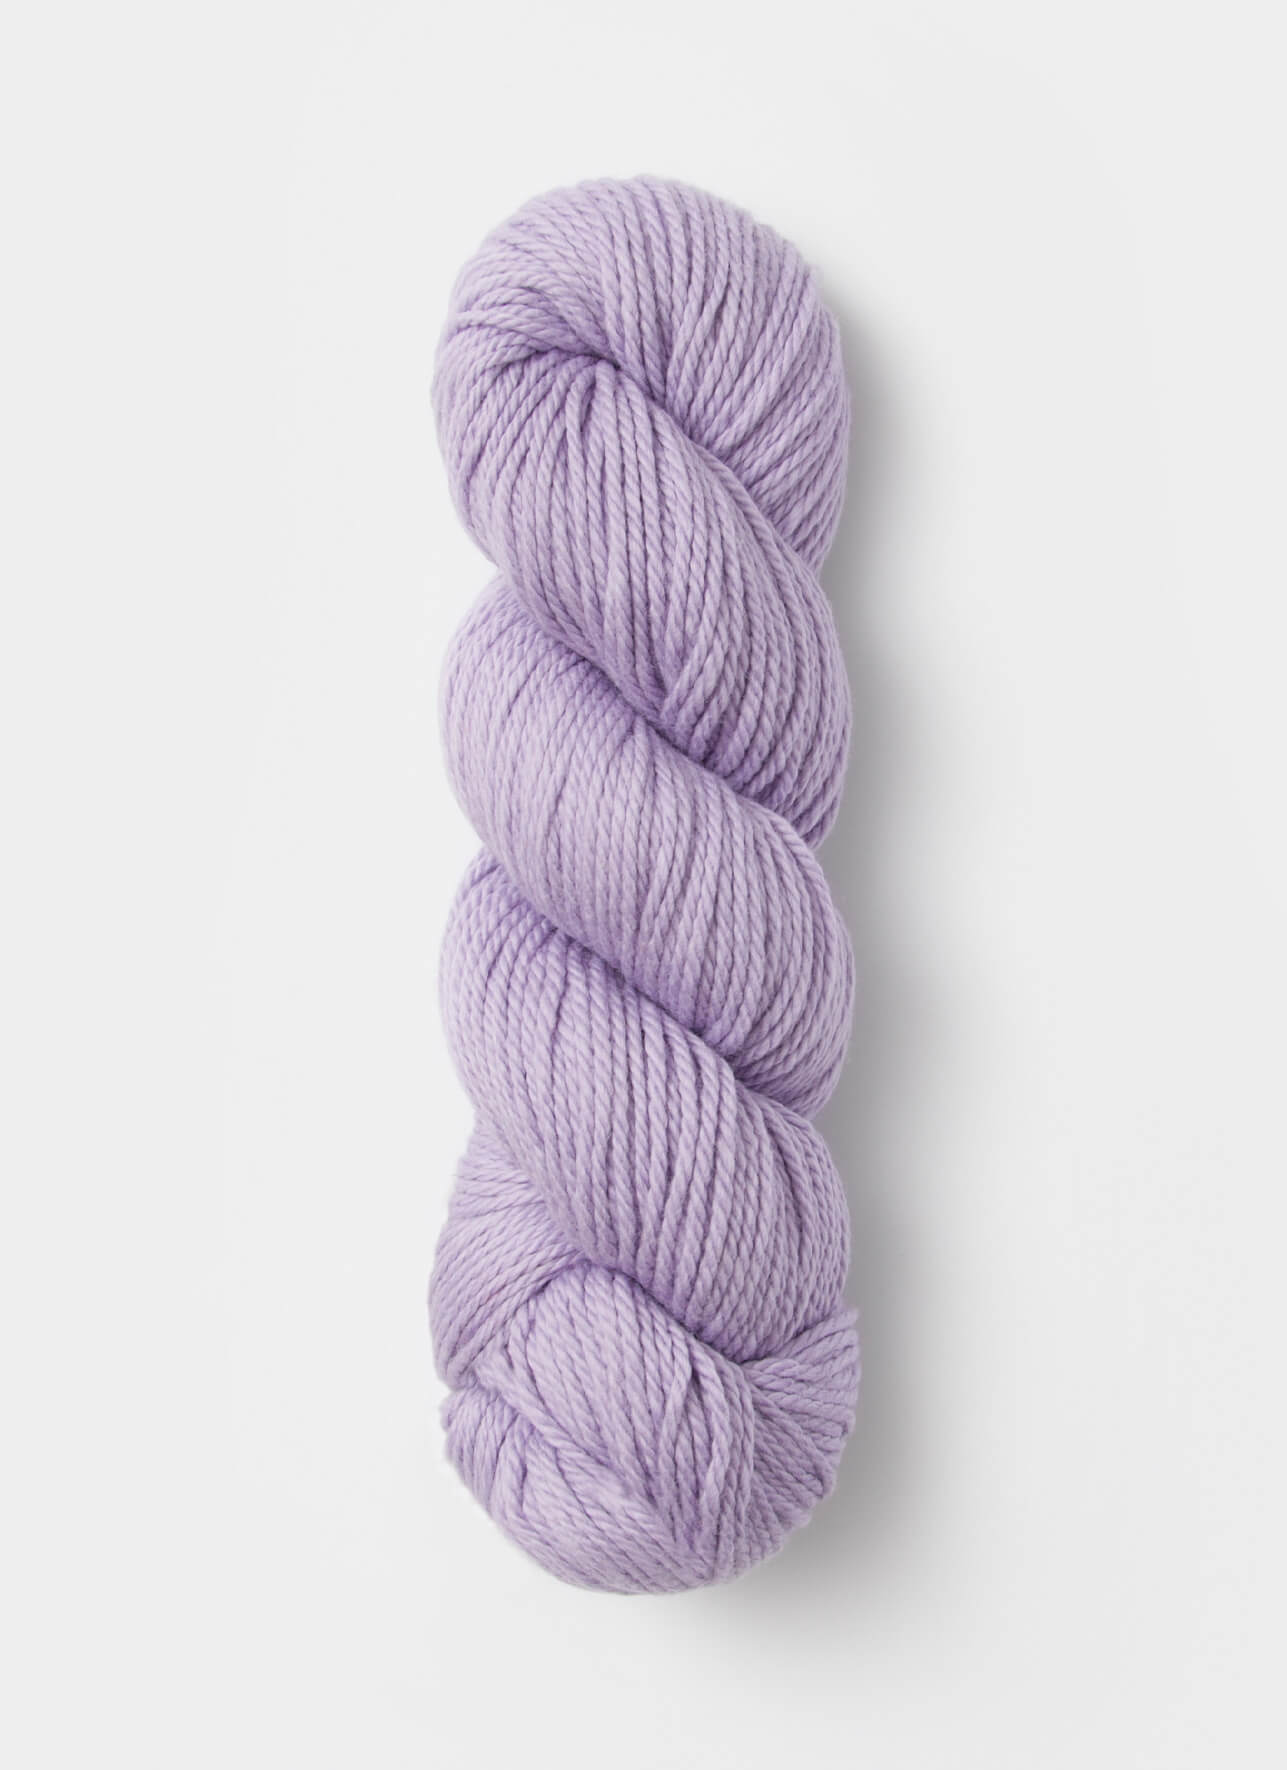 No. 7523: Lilac